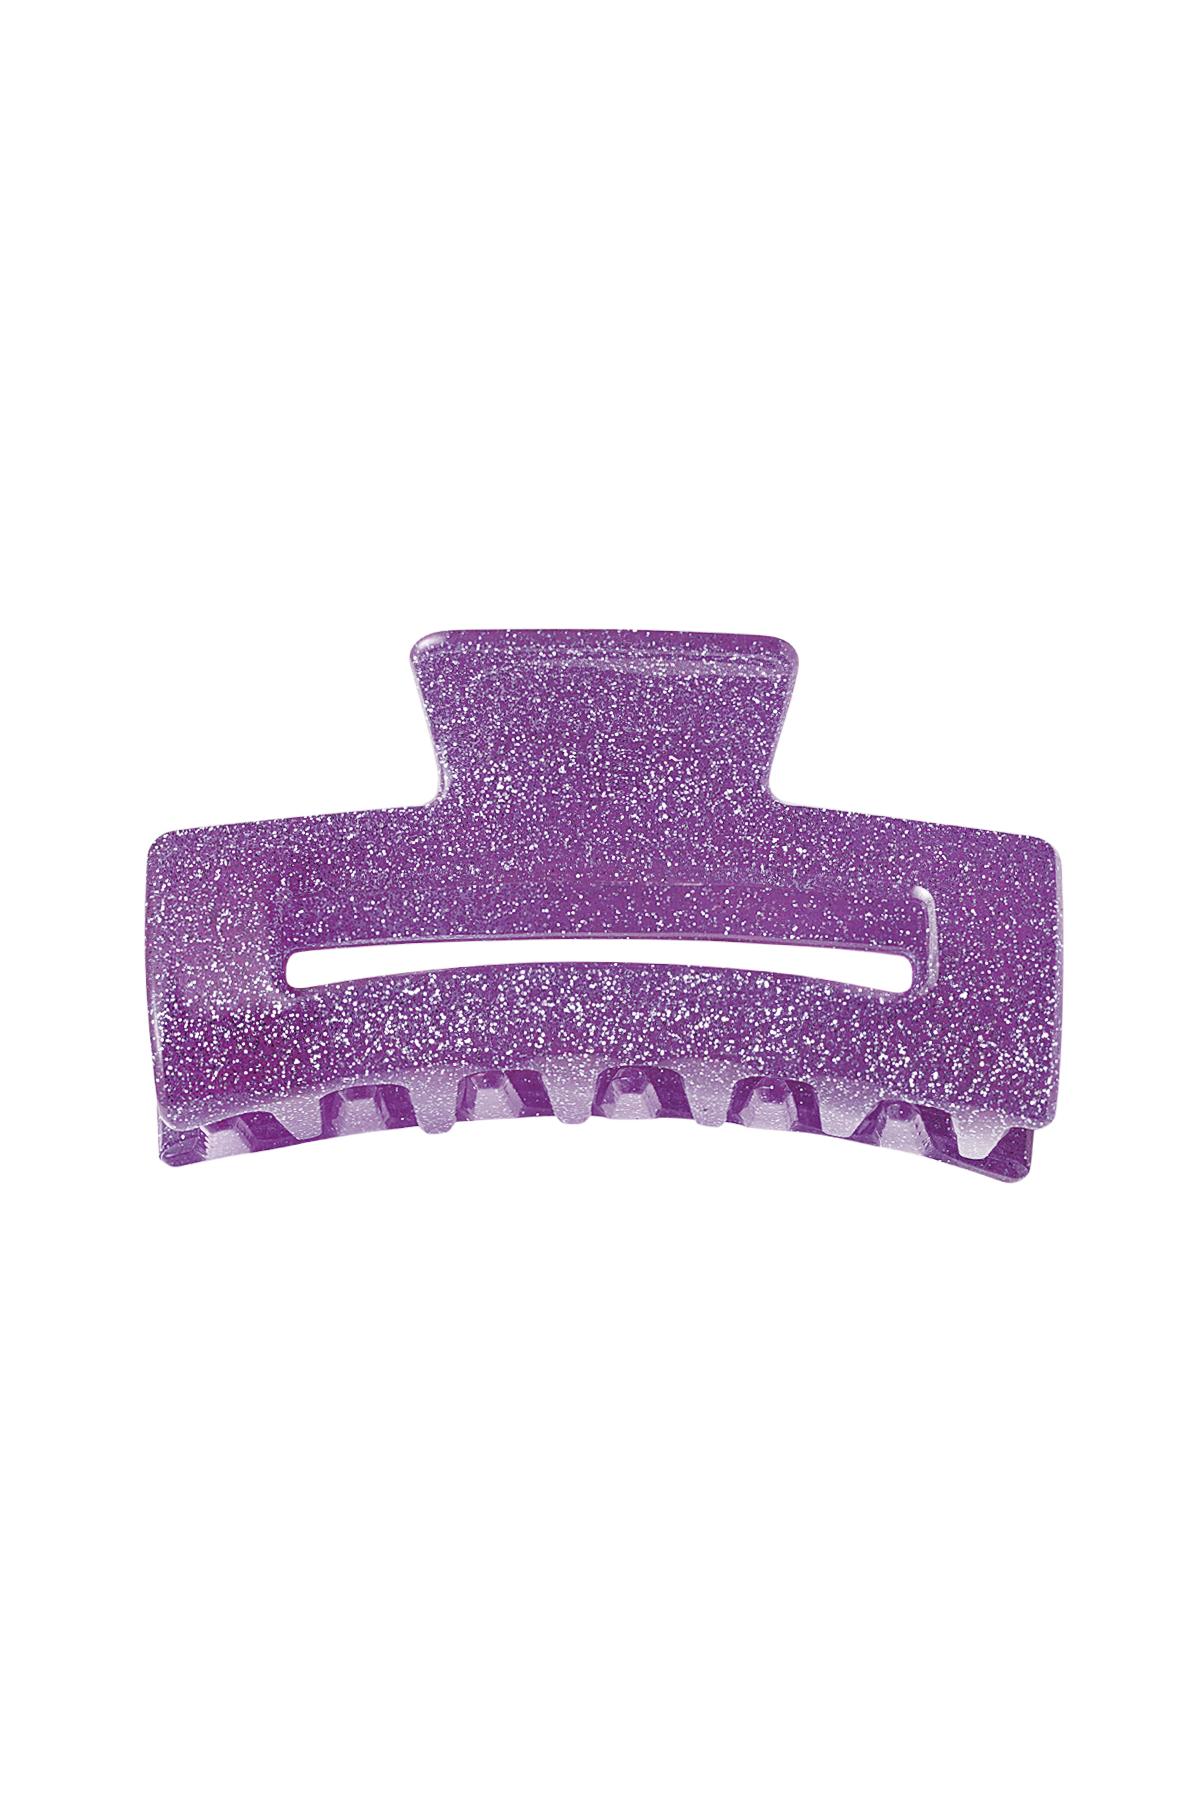 Saç tokası parıltısı Purple Sheet Material 